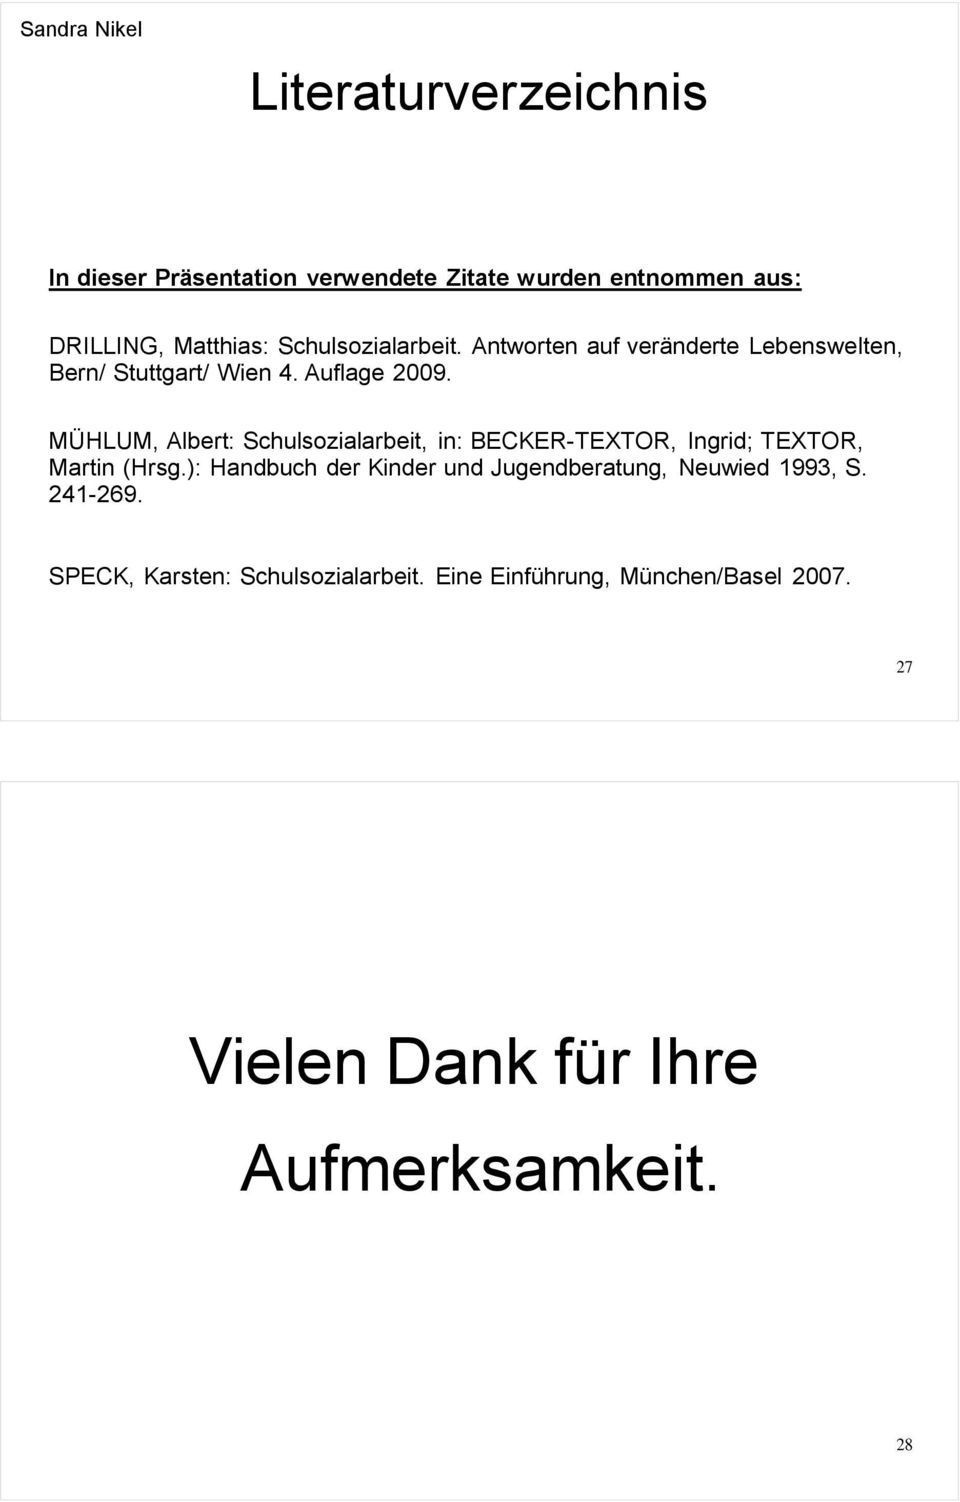 MÜHLUM, Albert: Schulsozialarbeit, in: BECKER-TEXTOR, Ingrid; TEXTOR, Martin (Hrsg.